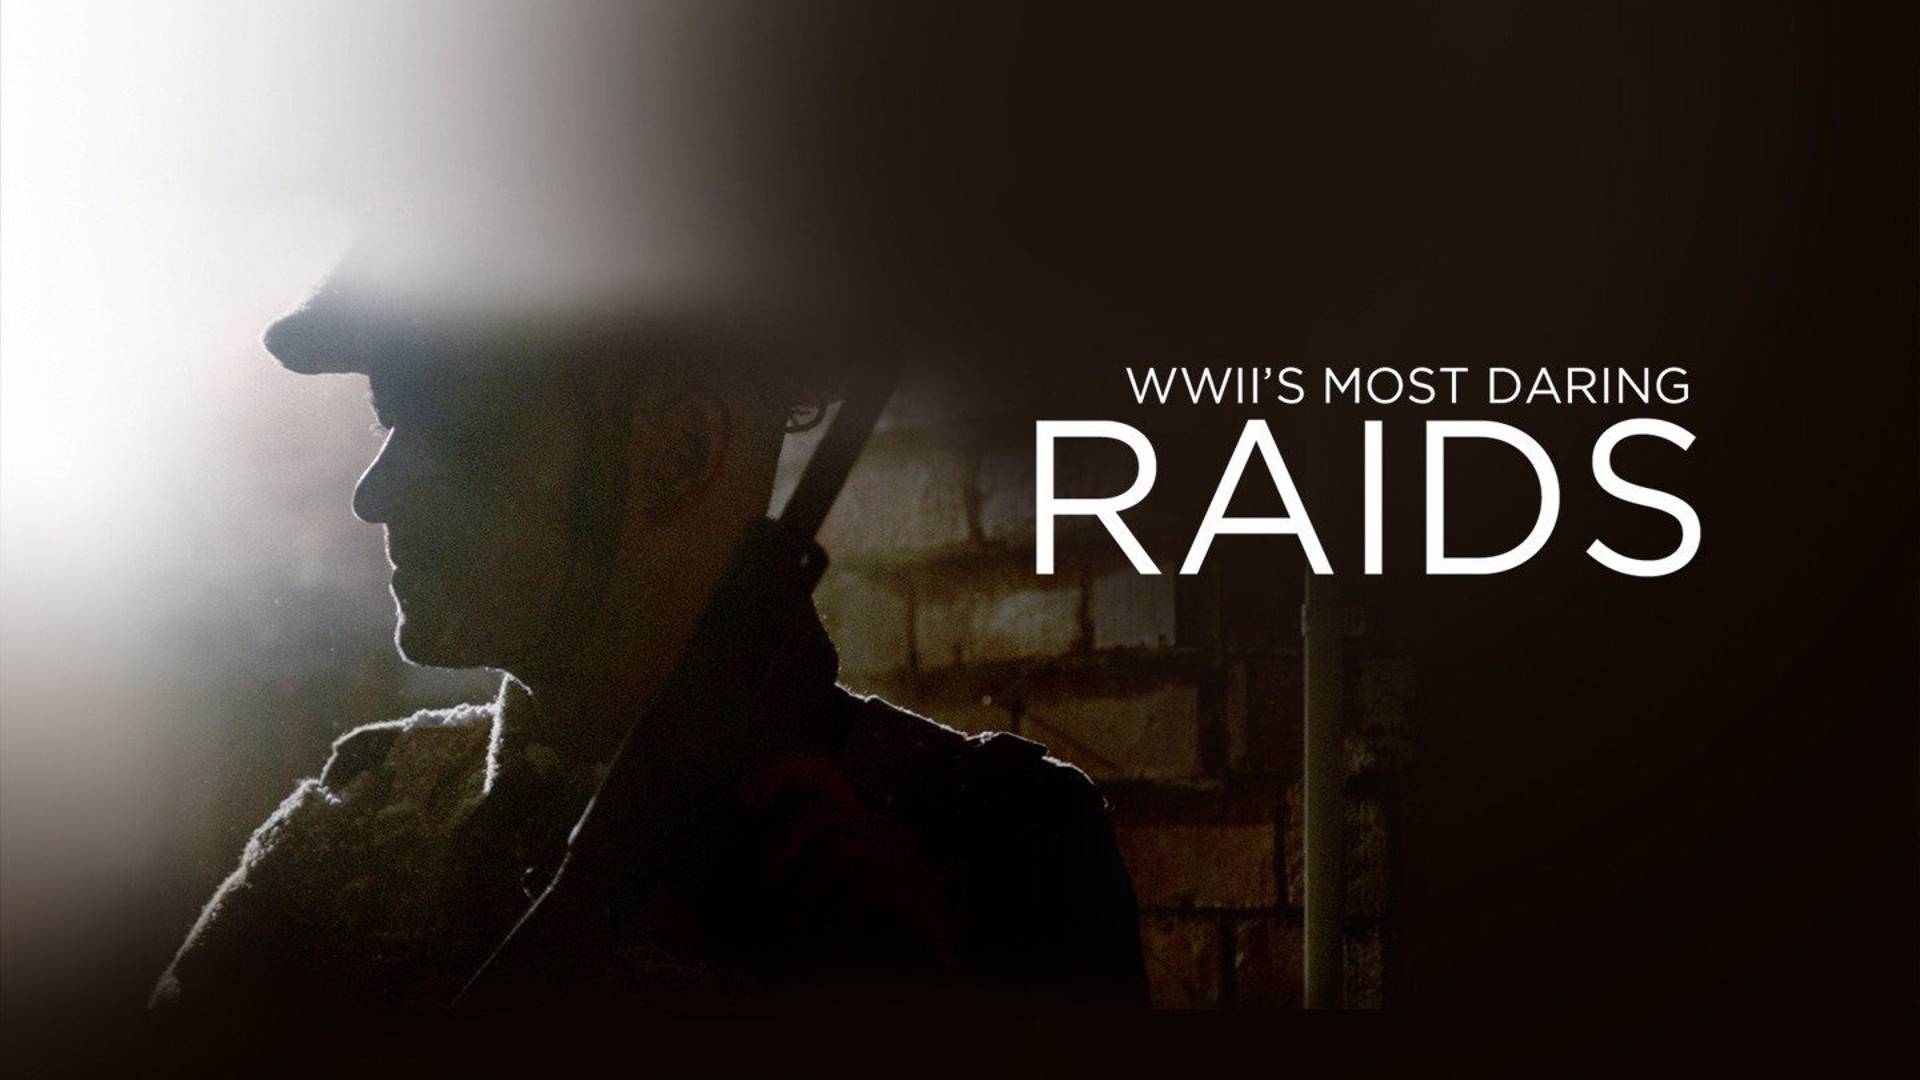 WWII's Greatest Raids (S1) & WWII's Most Daring Raids (S2)